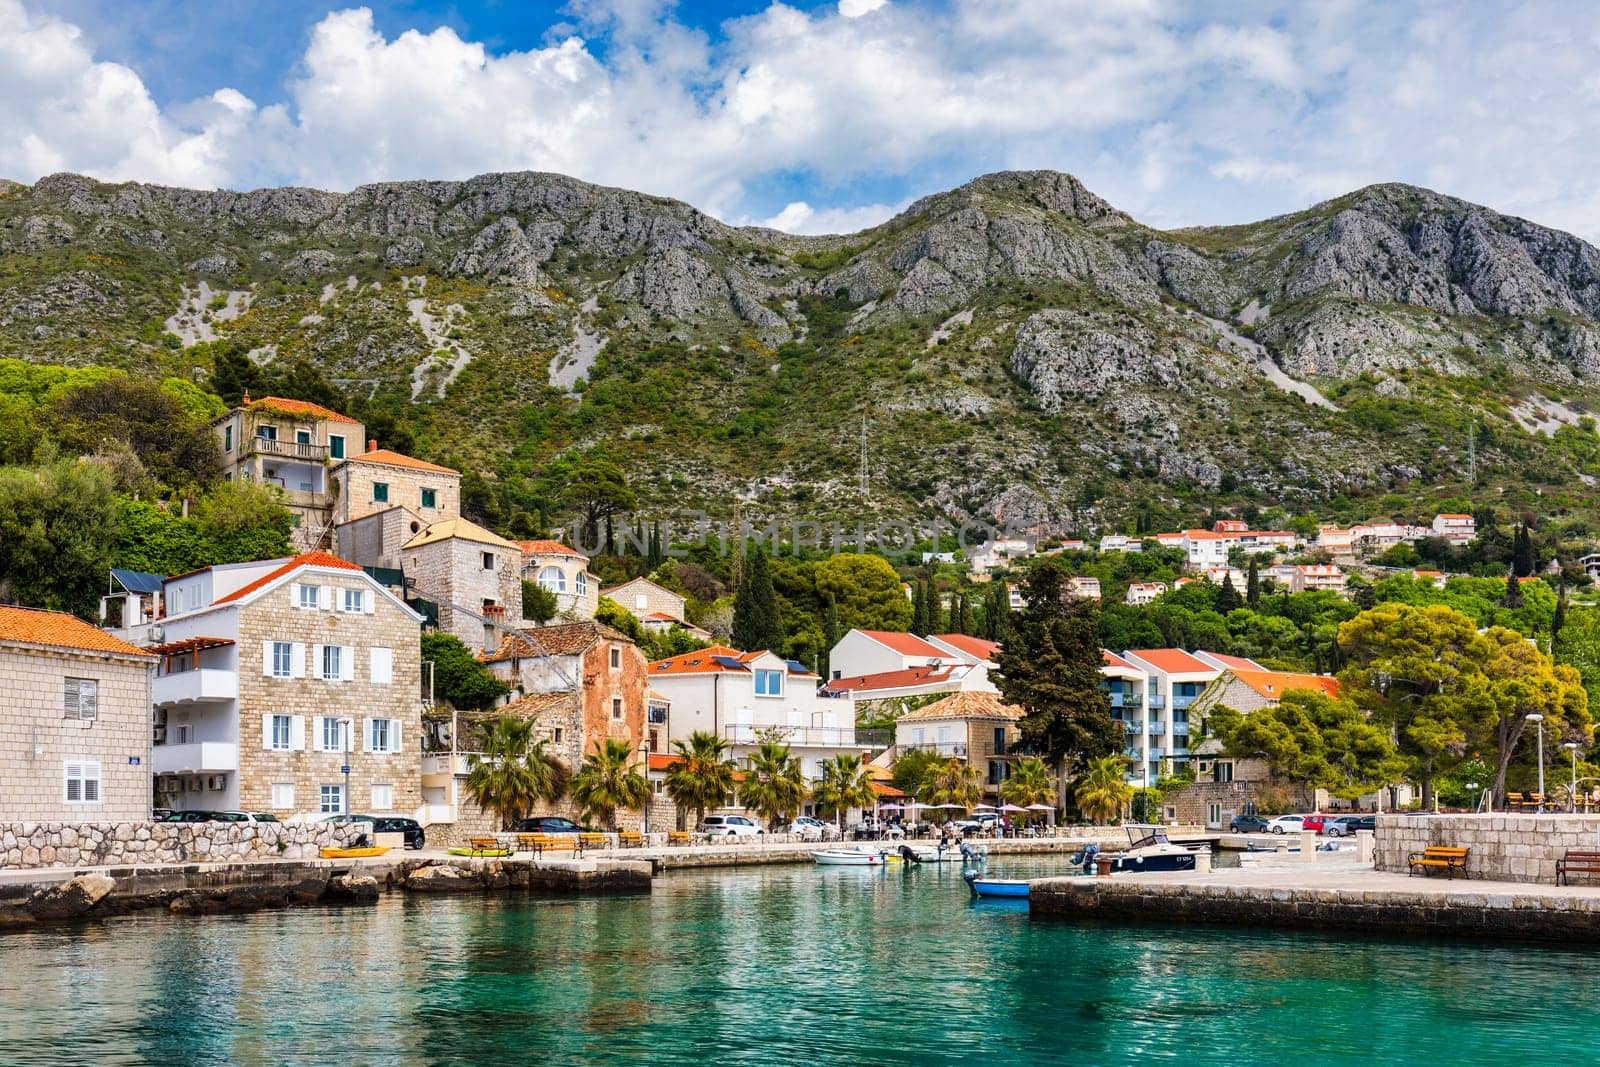 Idyllic village of Mlini in Dubrovnik archipelago view, south Dalmatia region of Croatia. Adriatic village of Mlini waterfront aerial view, Dubrovnik coastline of Croatia.